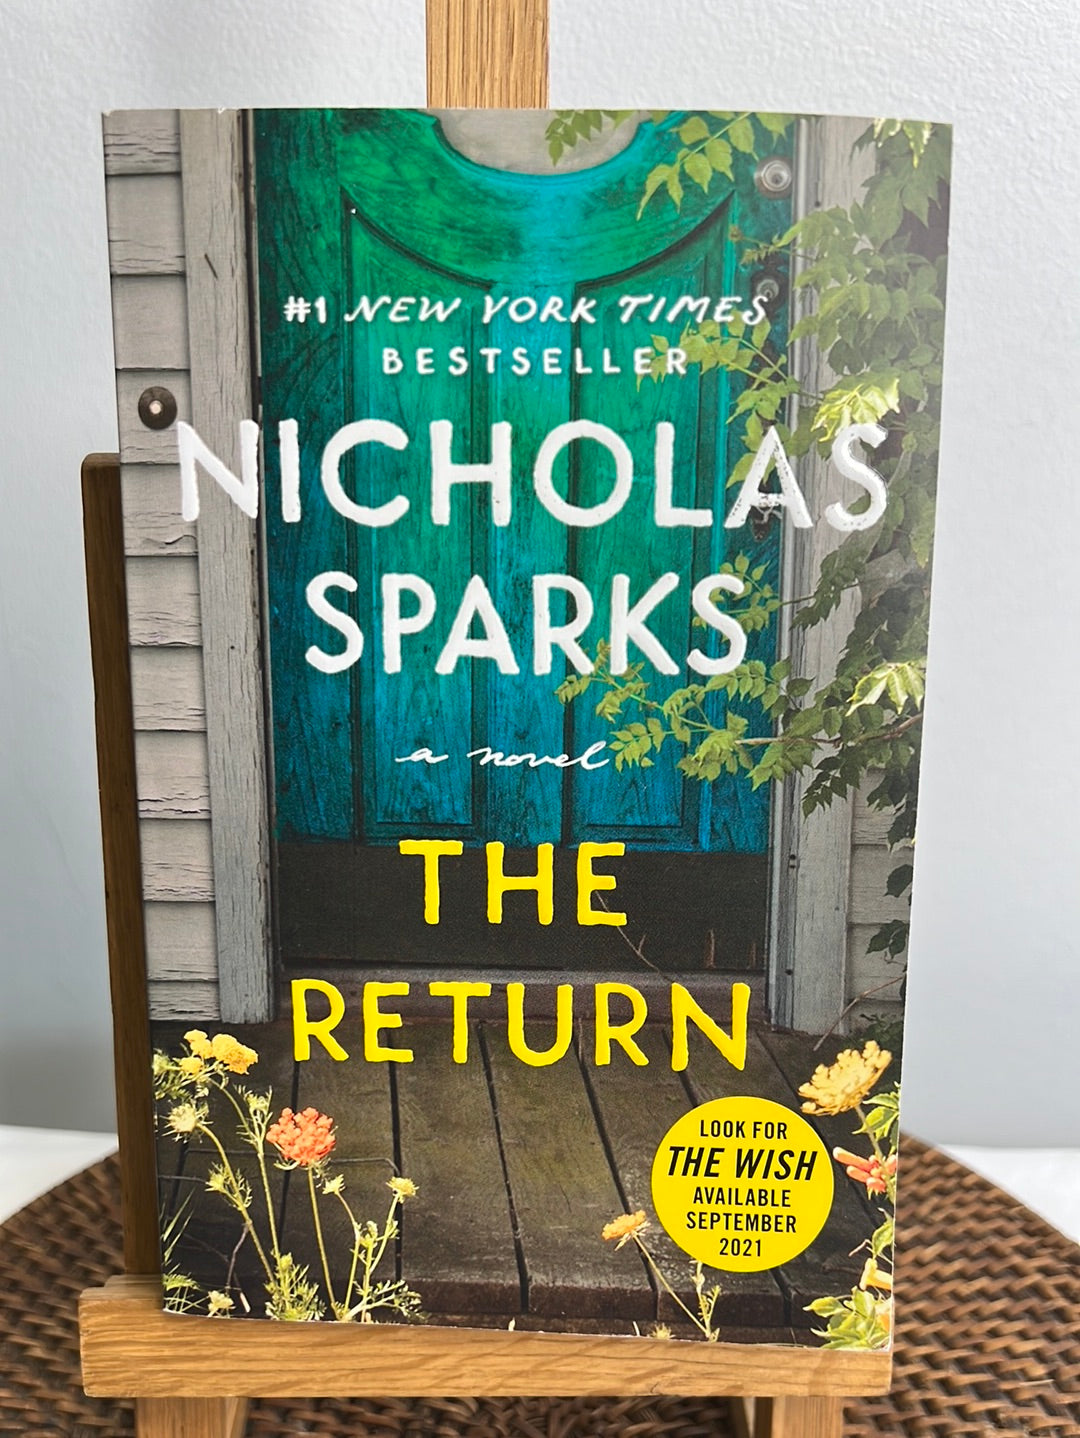 The Return- Nicholas Sparks